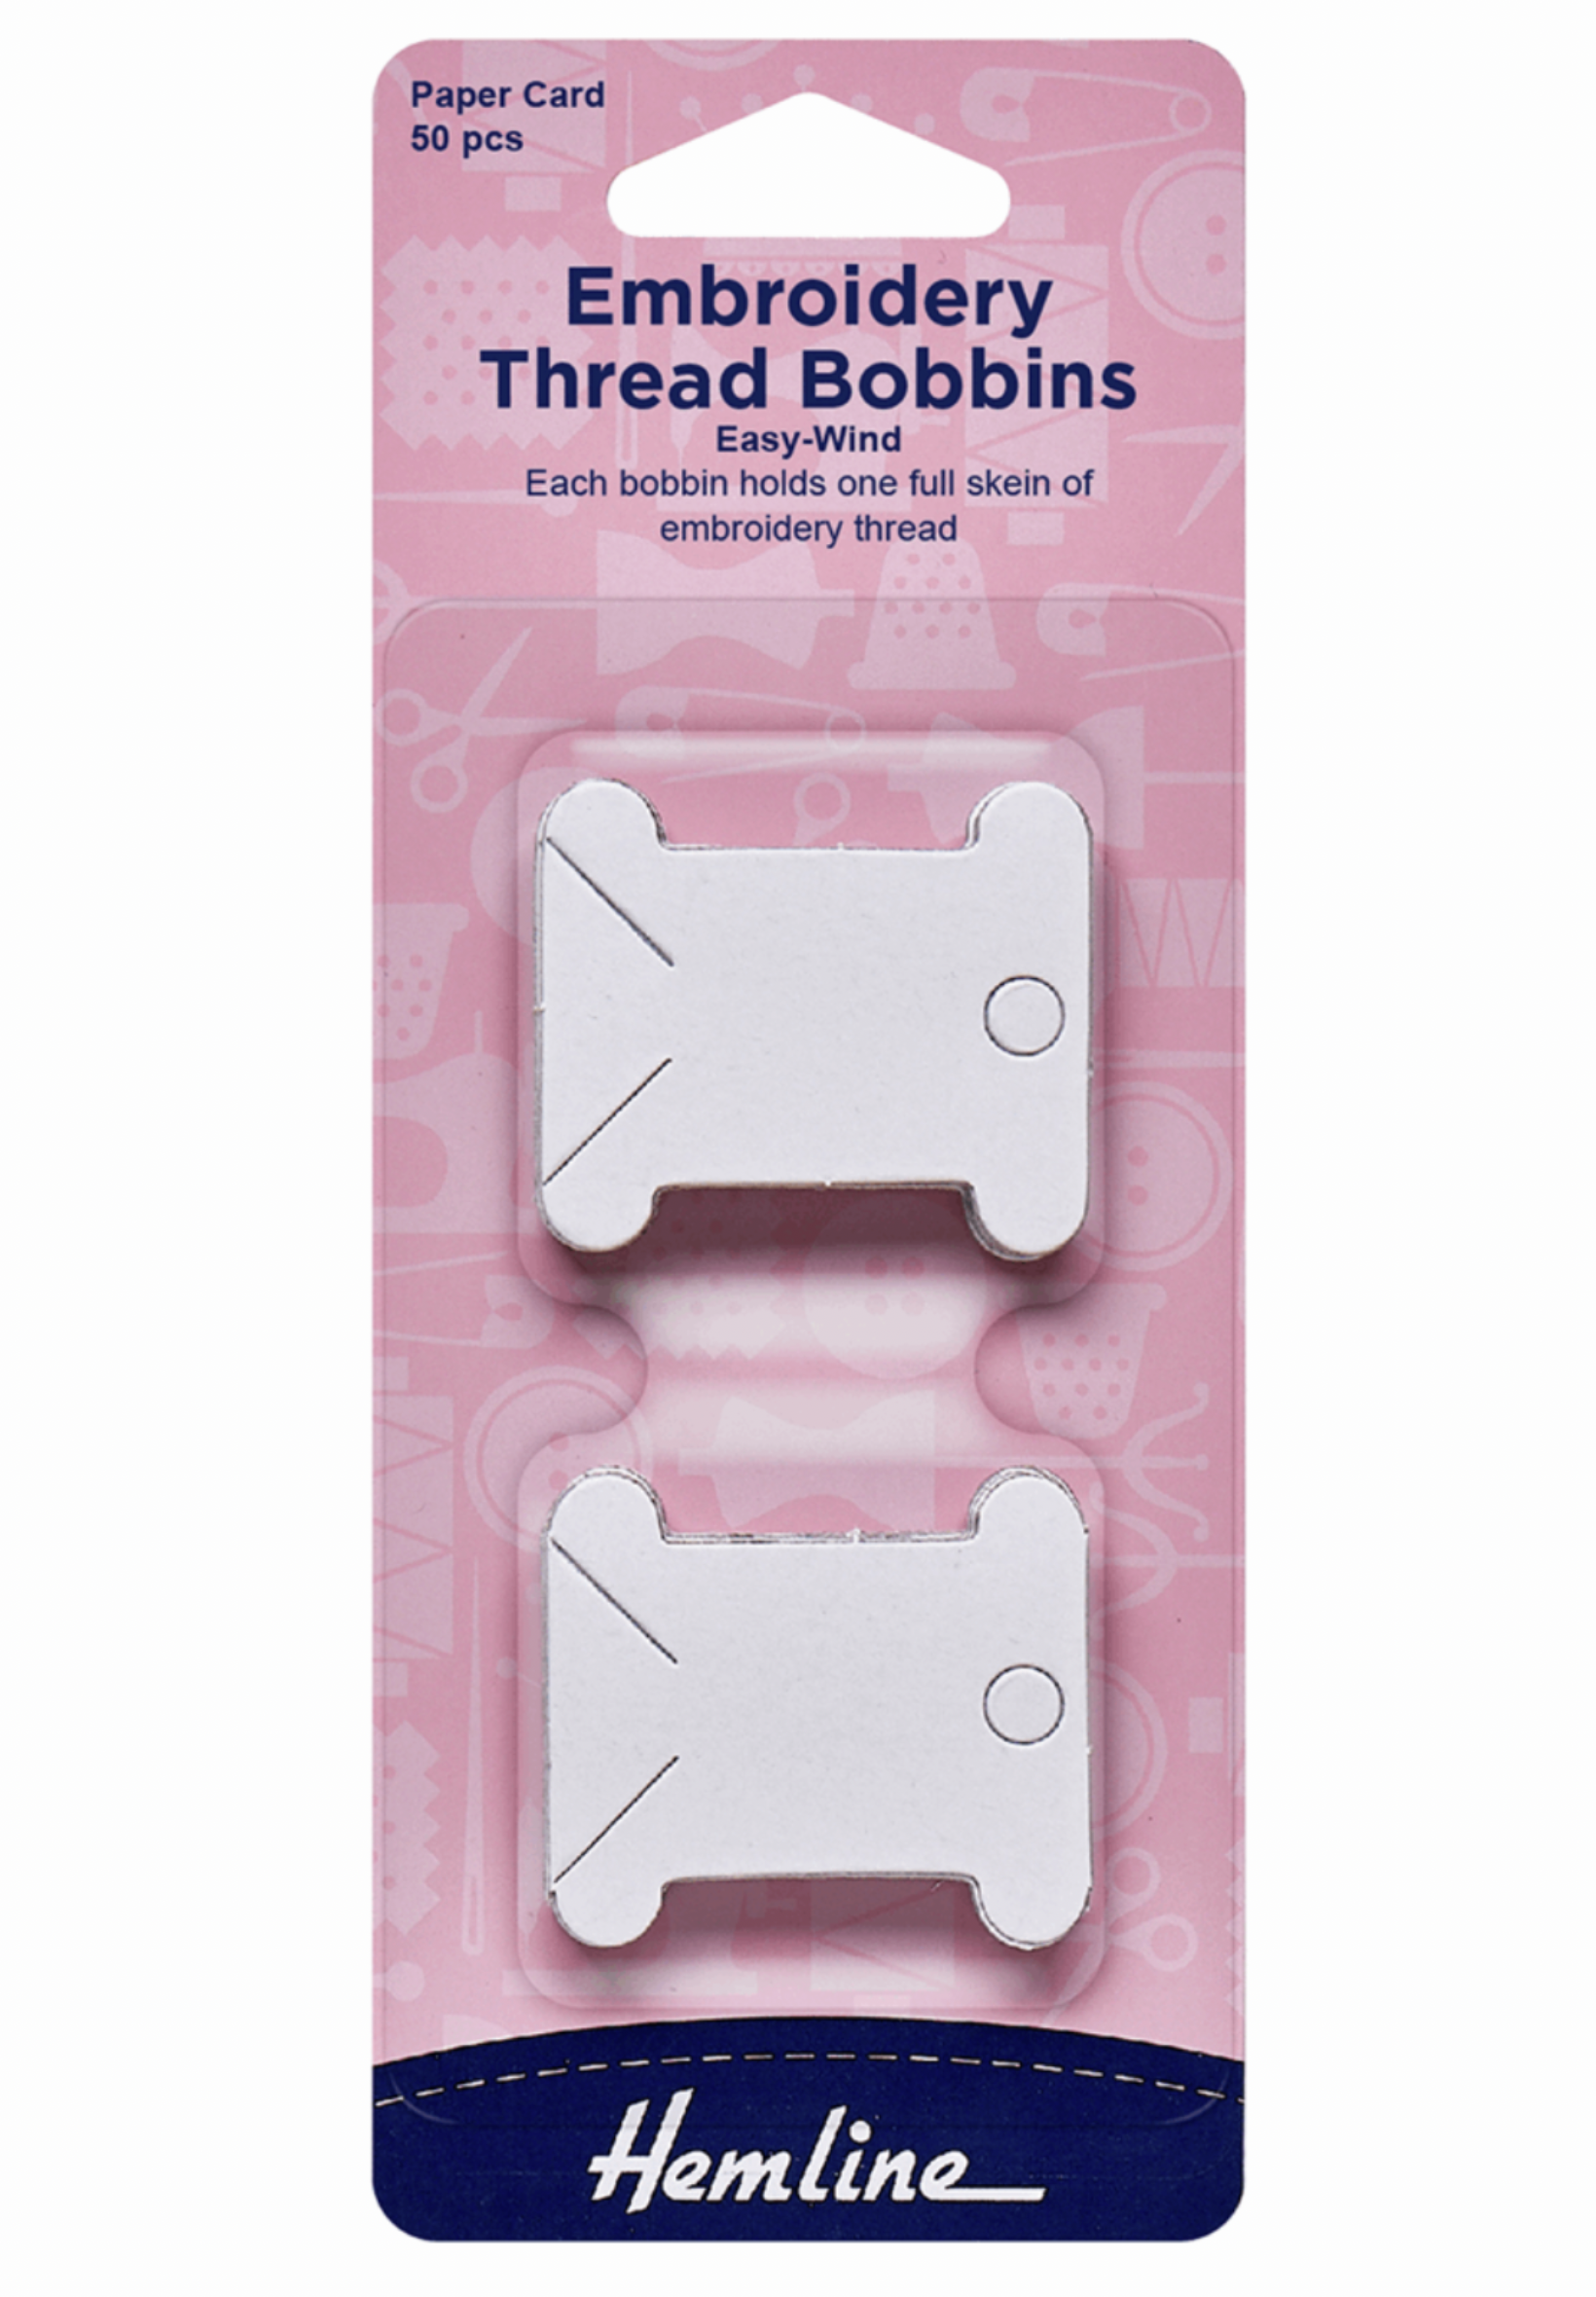 Embroidery thread bobbins